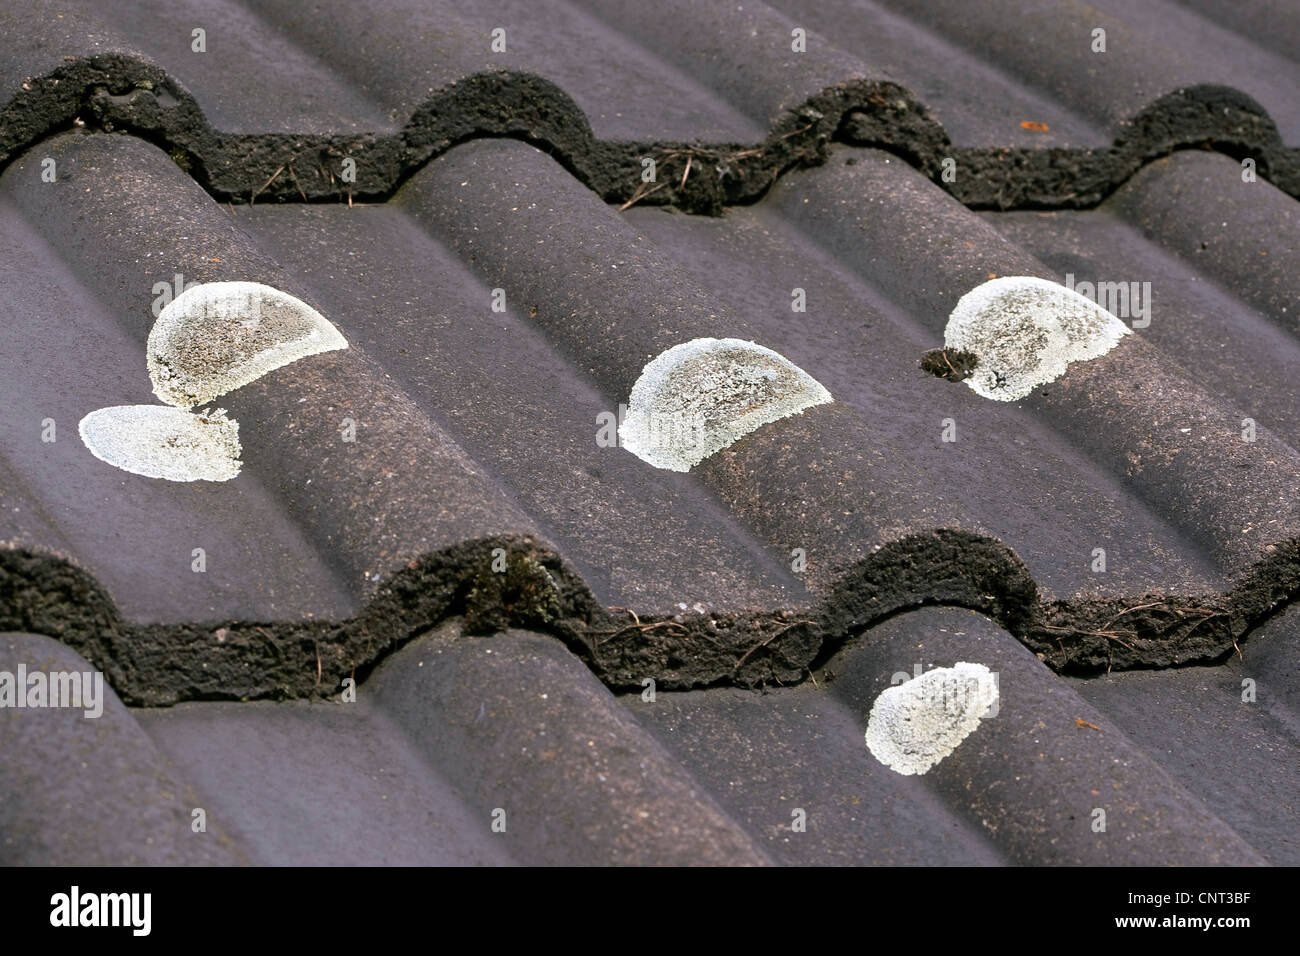 lichen (Lecanora muralis), growing on roof tiles Stock Photo